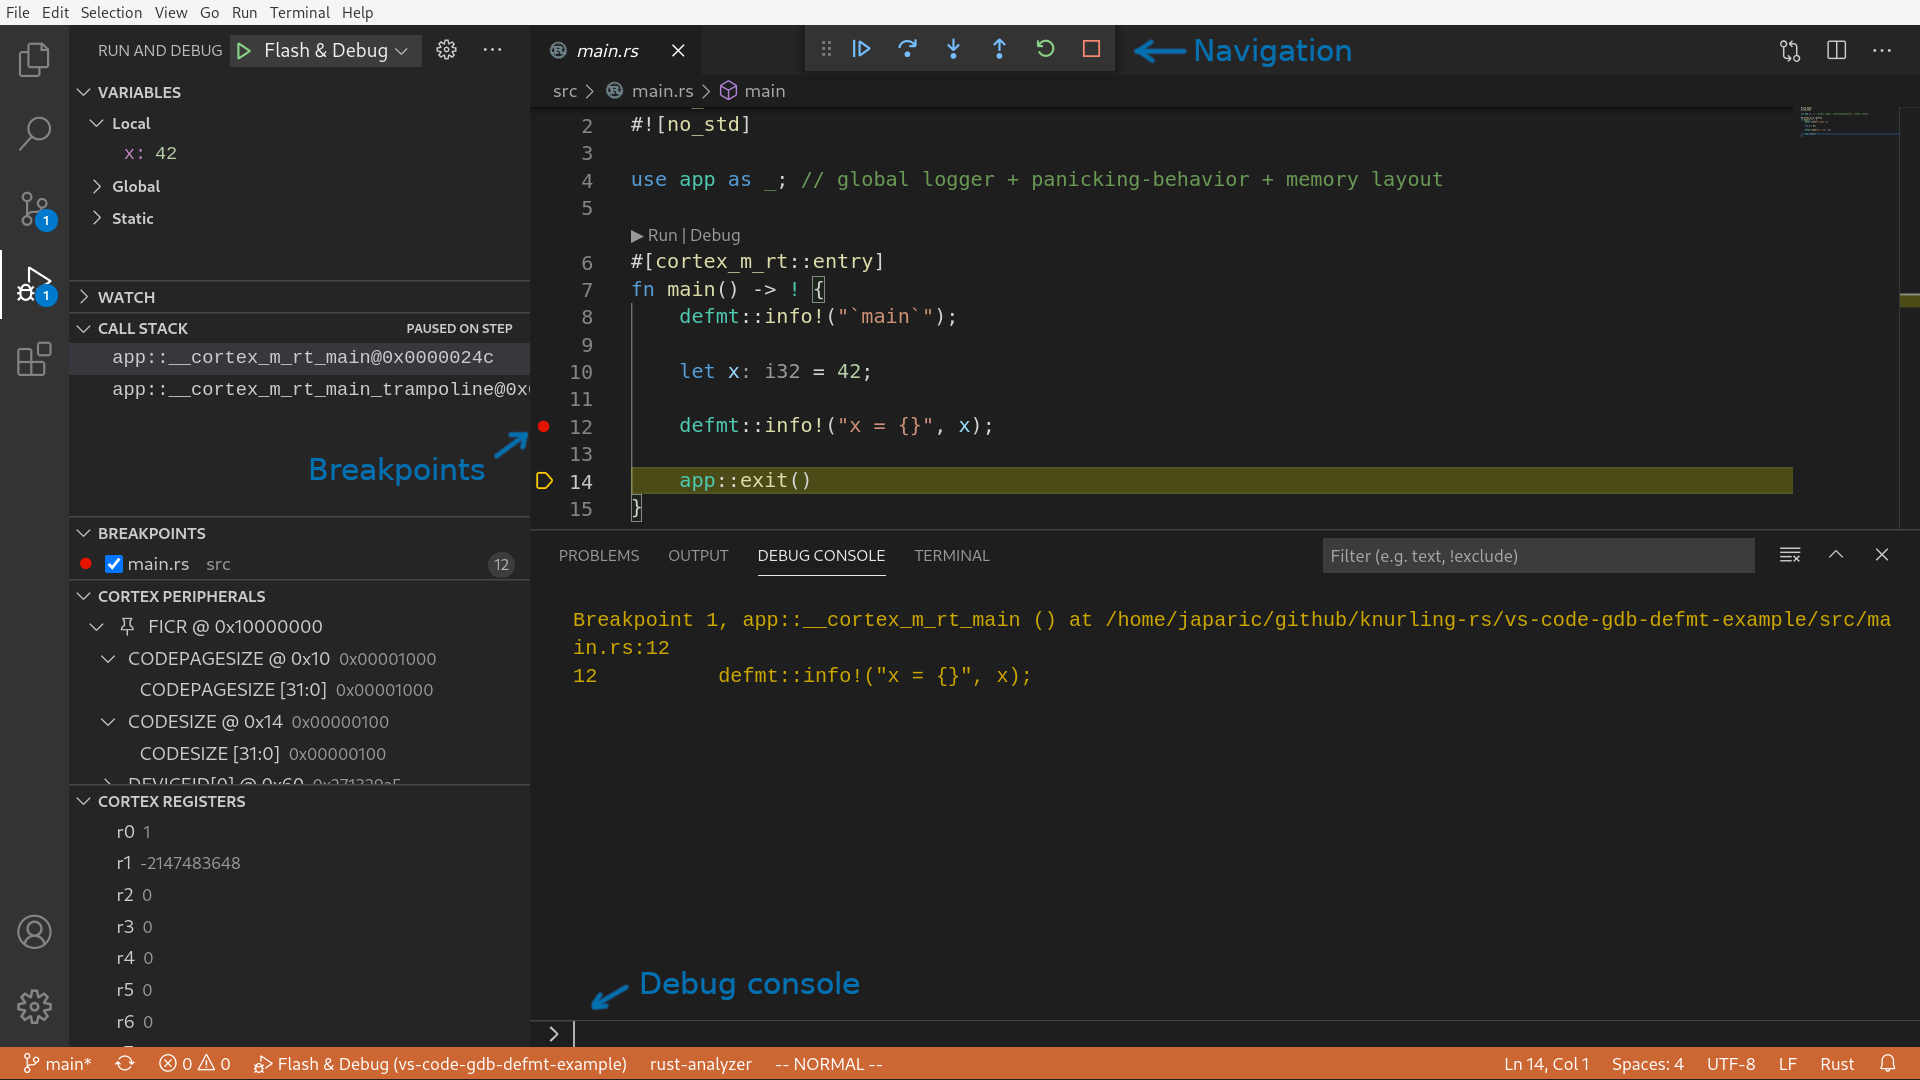 VS code debugging session